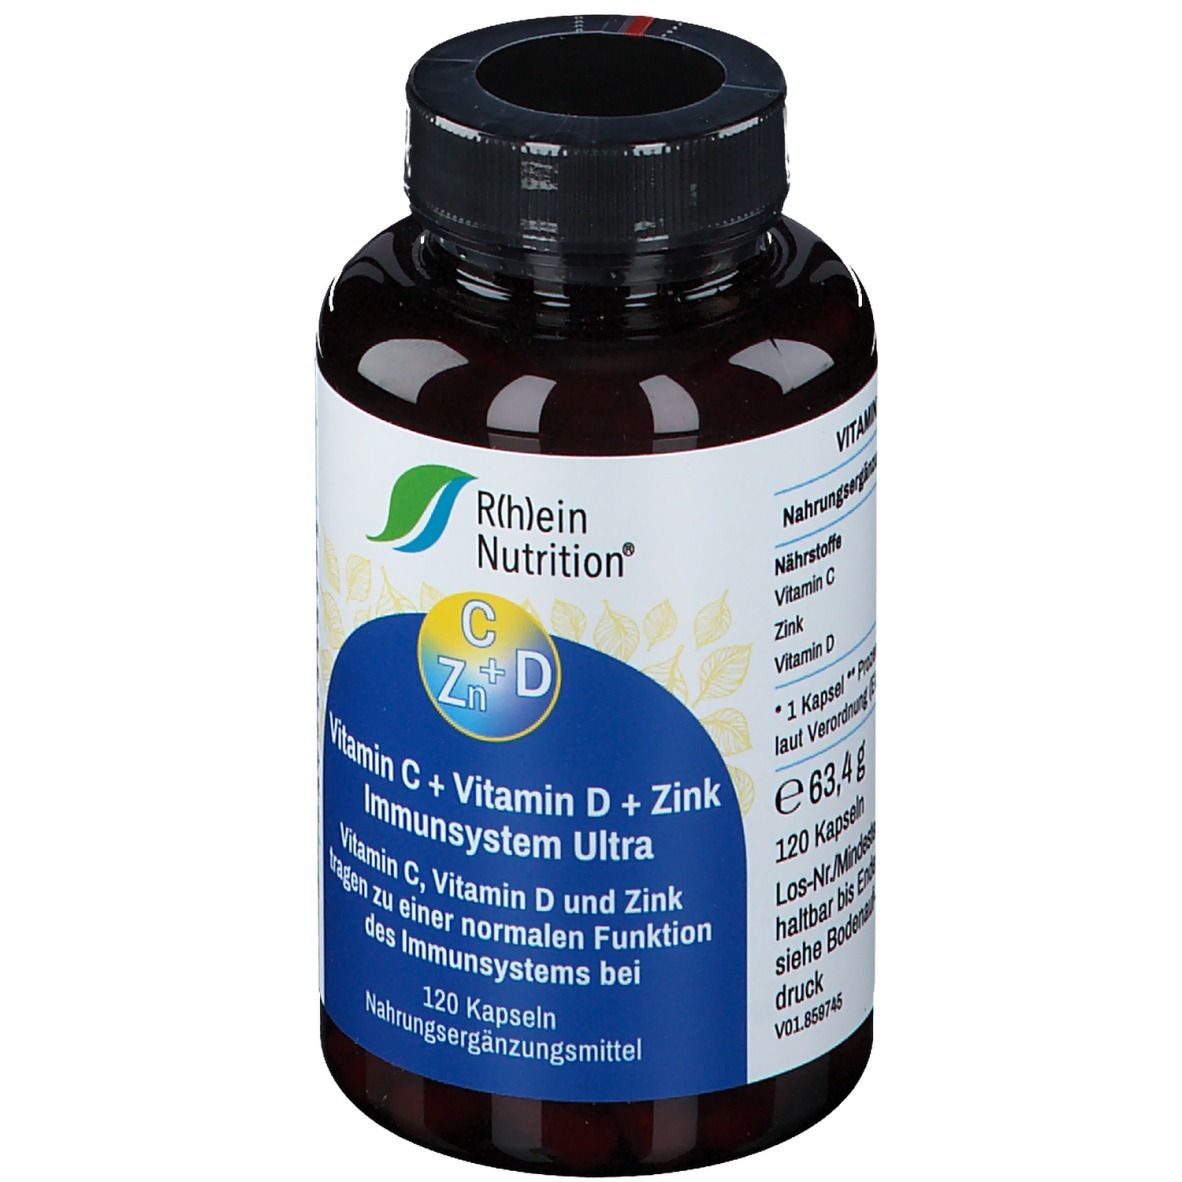 RheinNutrition® Vitamin C + Vitamin D + Zink Immunsystem Ultra